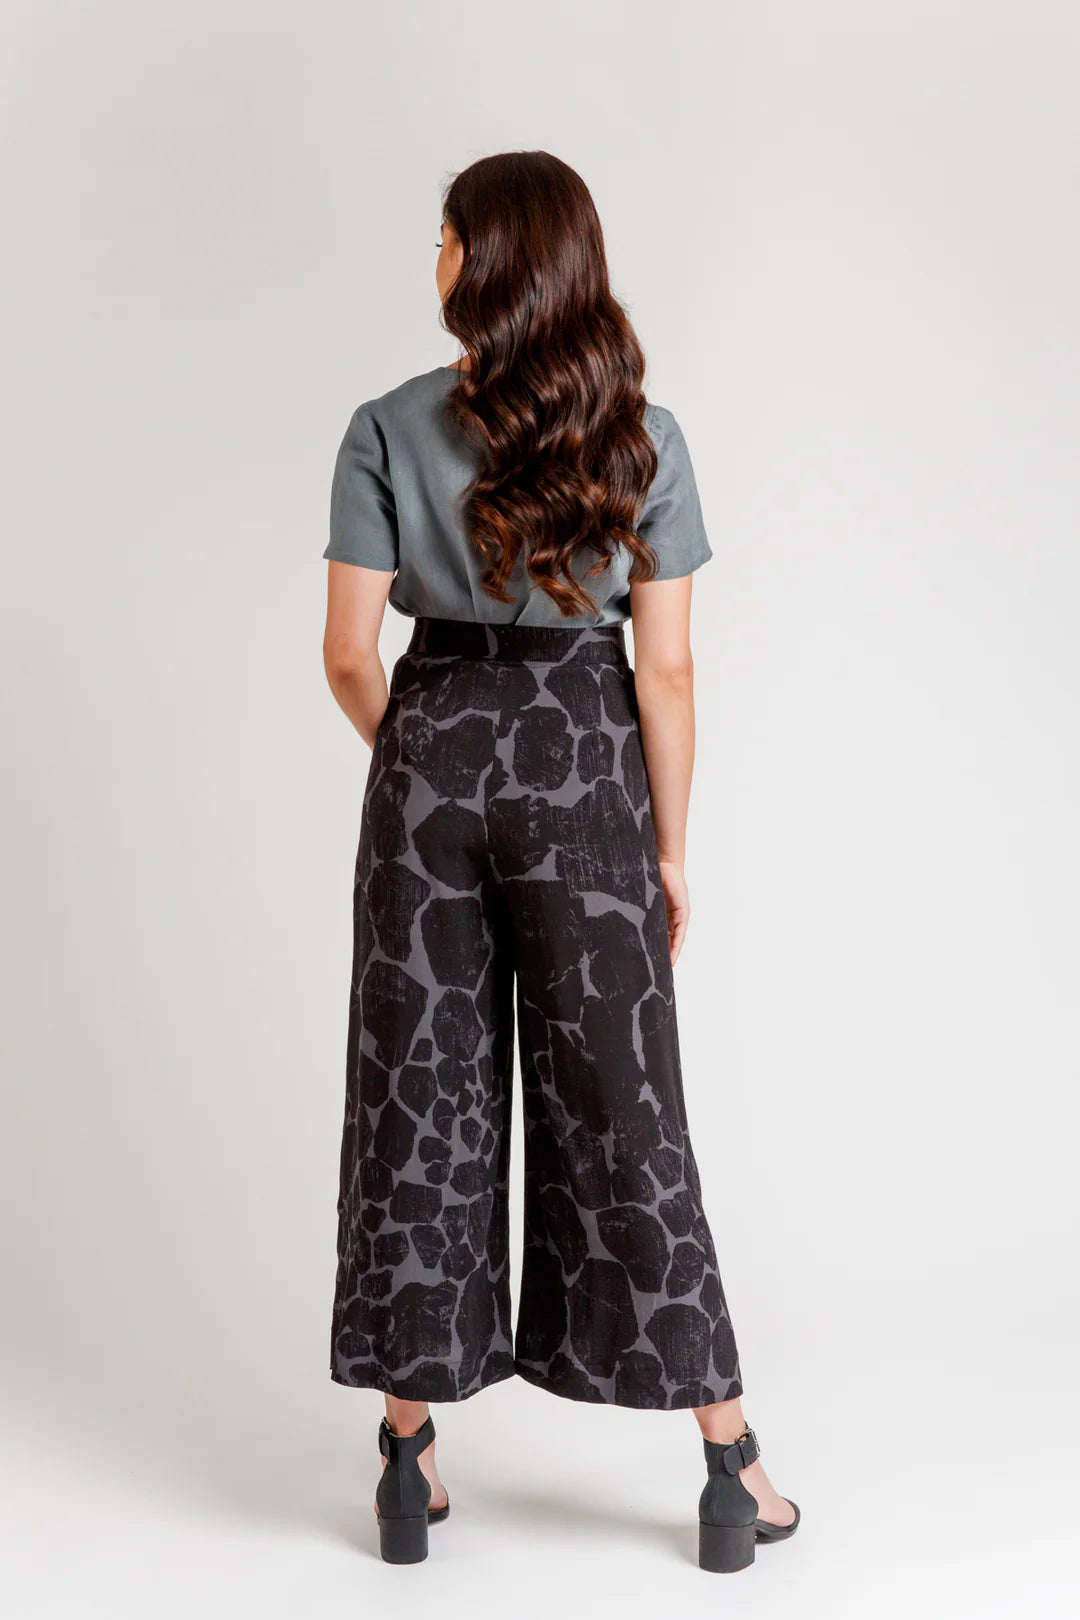 Megan Nielsen - Flint Pants and Shorts Sewing Pattern